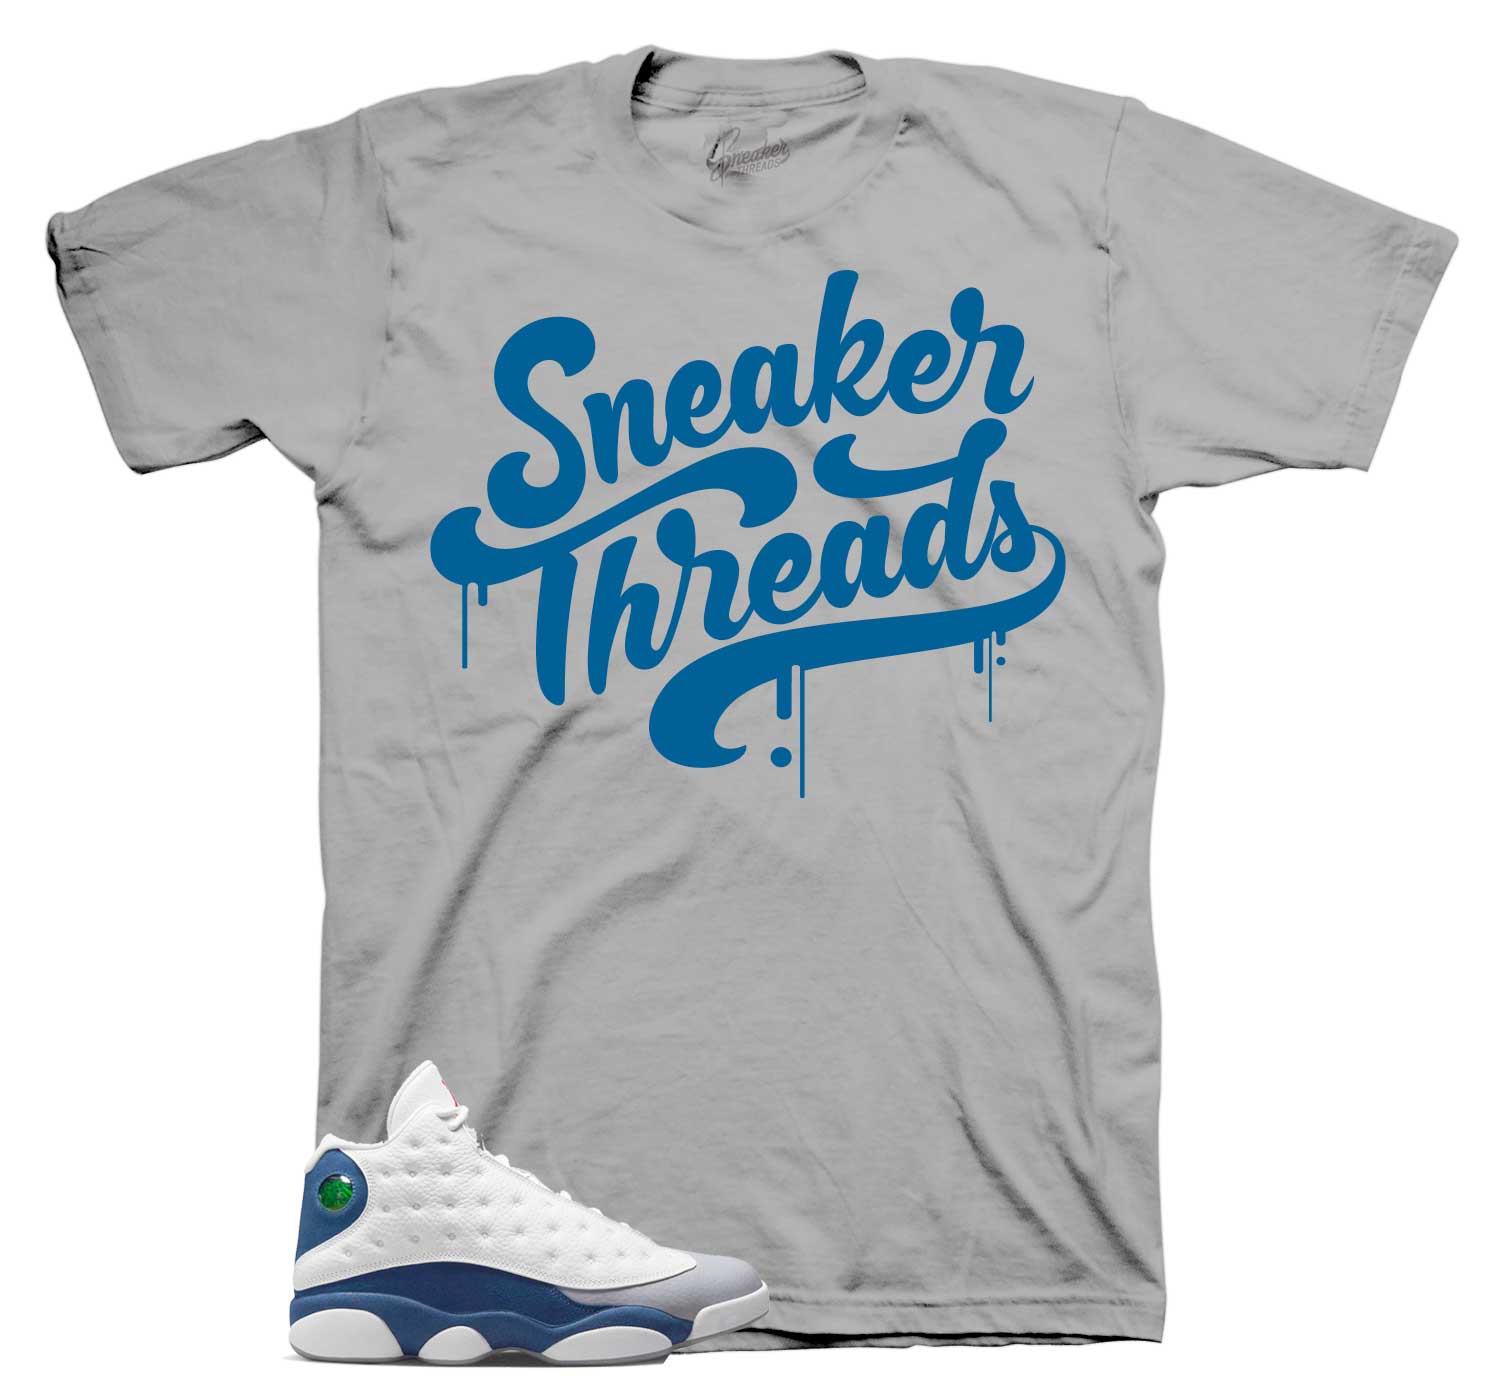 Sneaker Tees and Shirts Match Jordan Nike Shoes | Sneaker Threads®